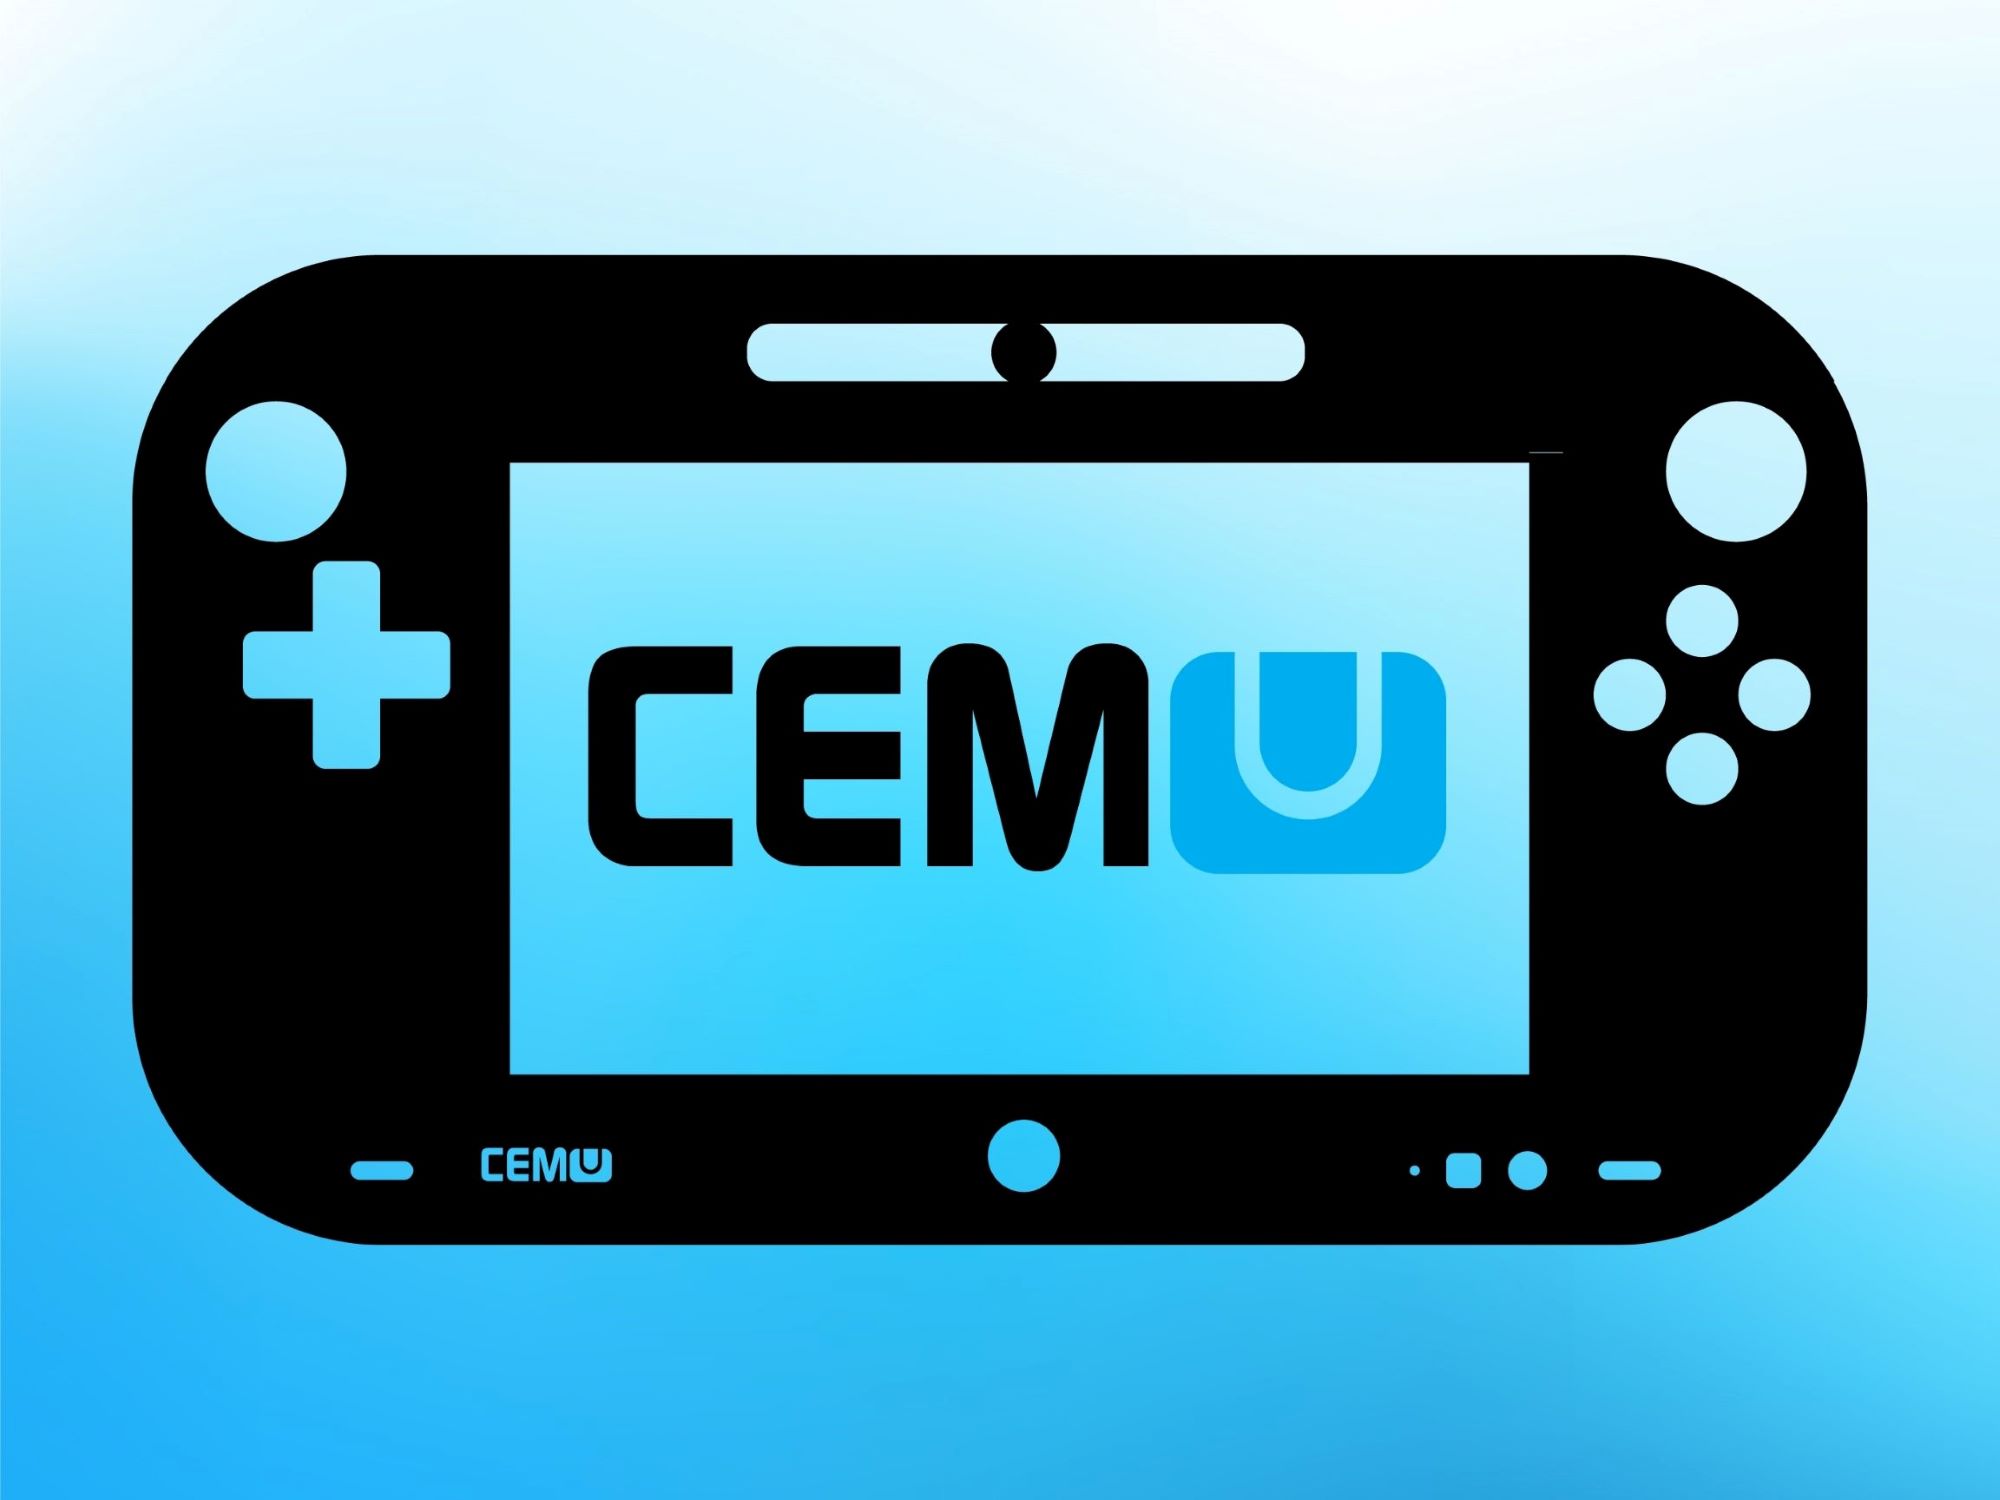 How to setup Wii U USB Helper - 2020 Guide (Games for Cemu